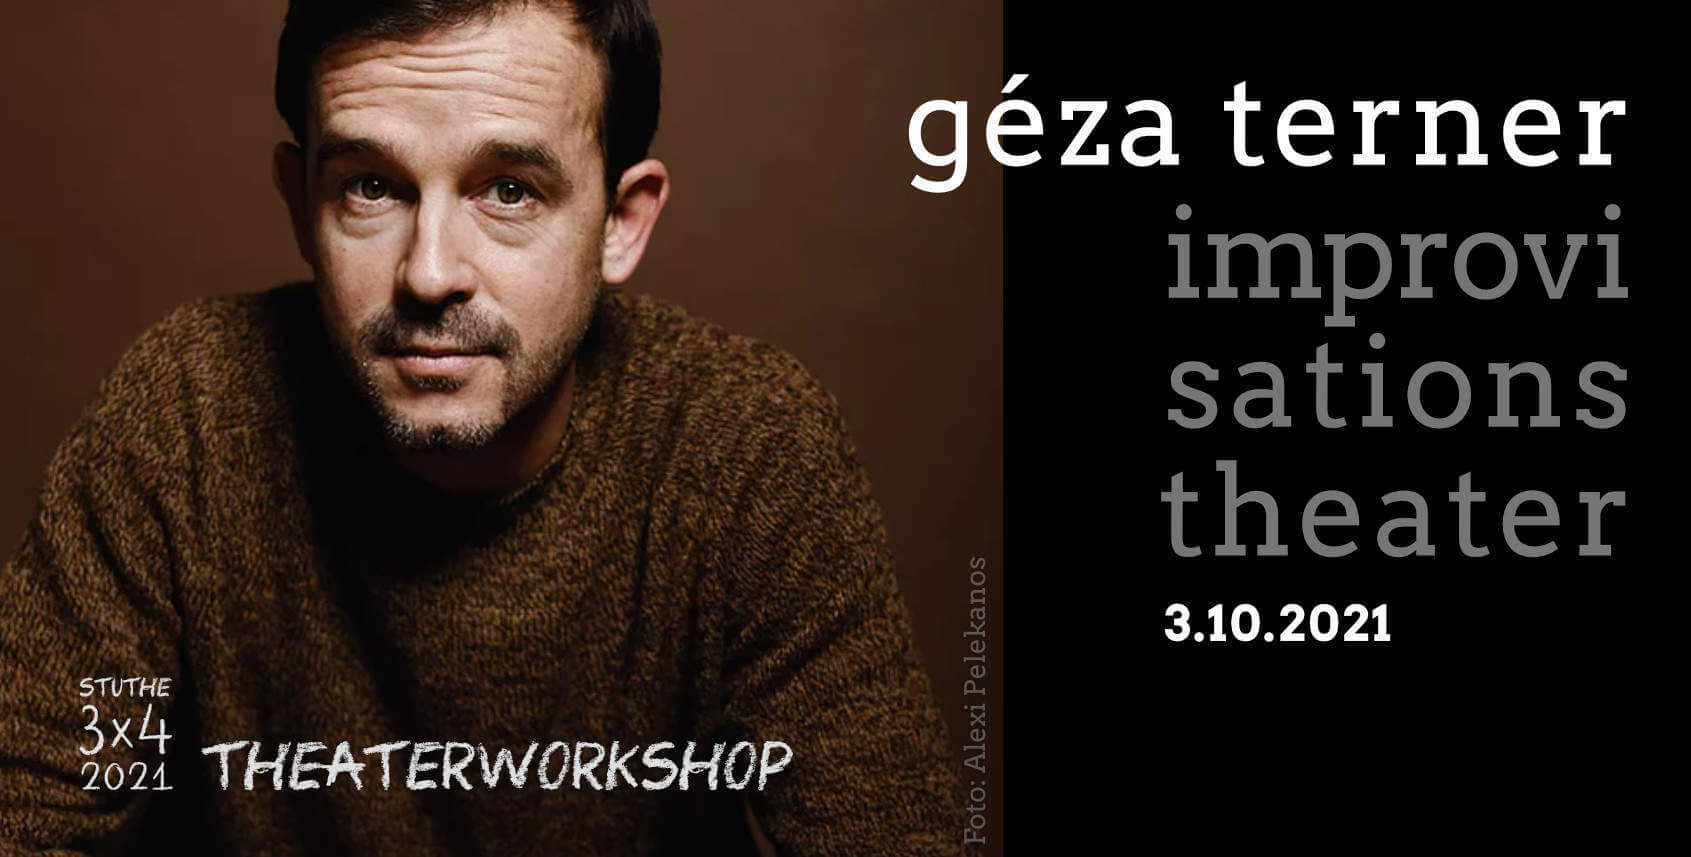 Profiworkshop Géza Terner 2021